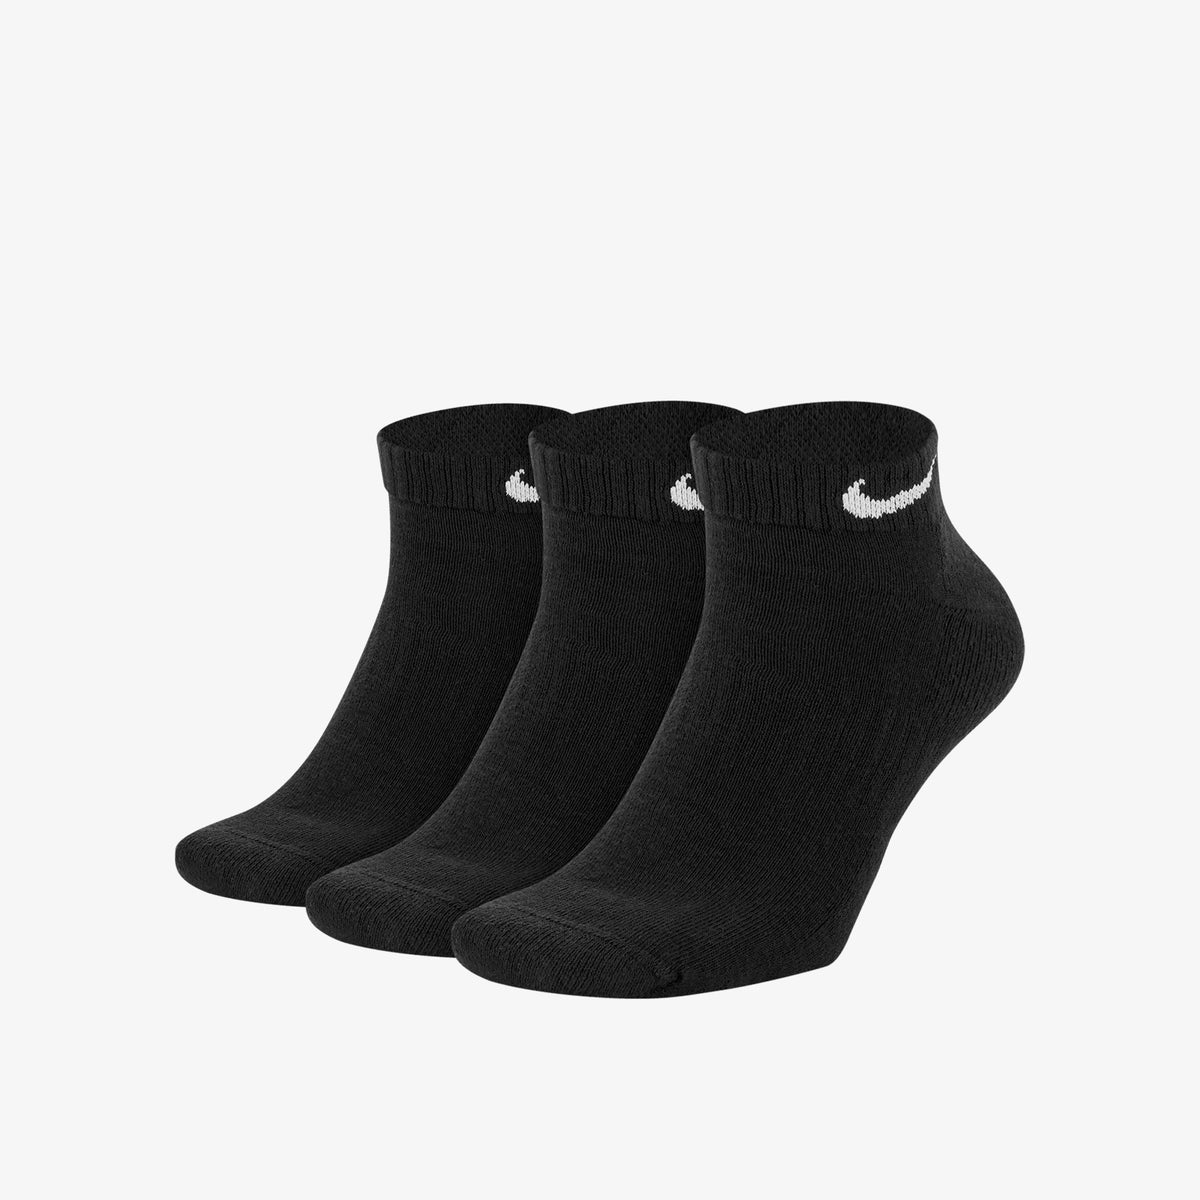 Nike Everyday Cushion Low Socks (3 Pairs) - Black